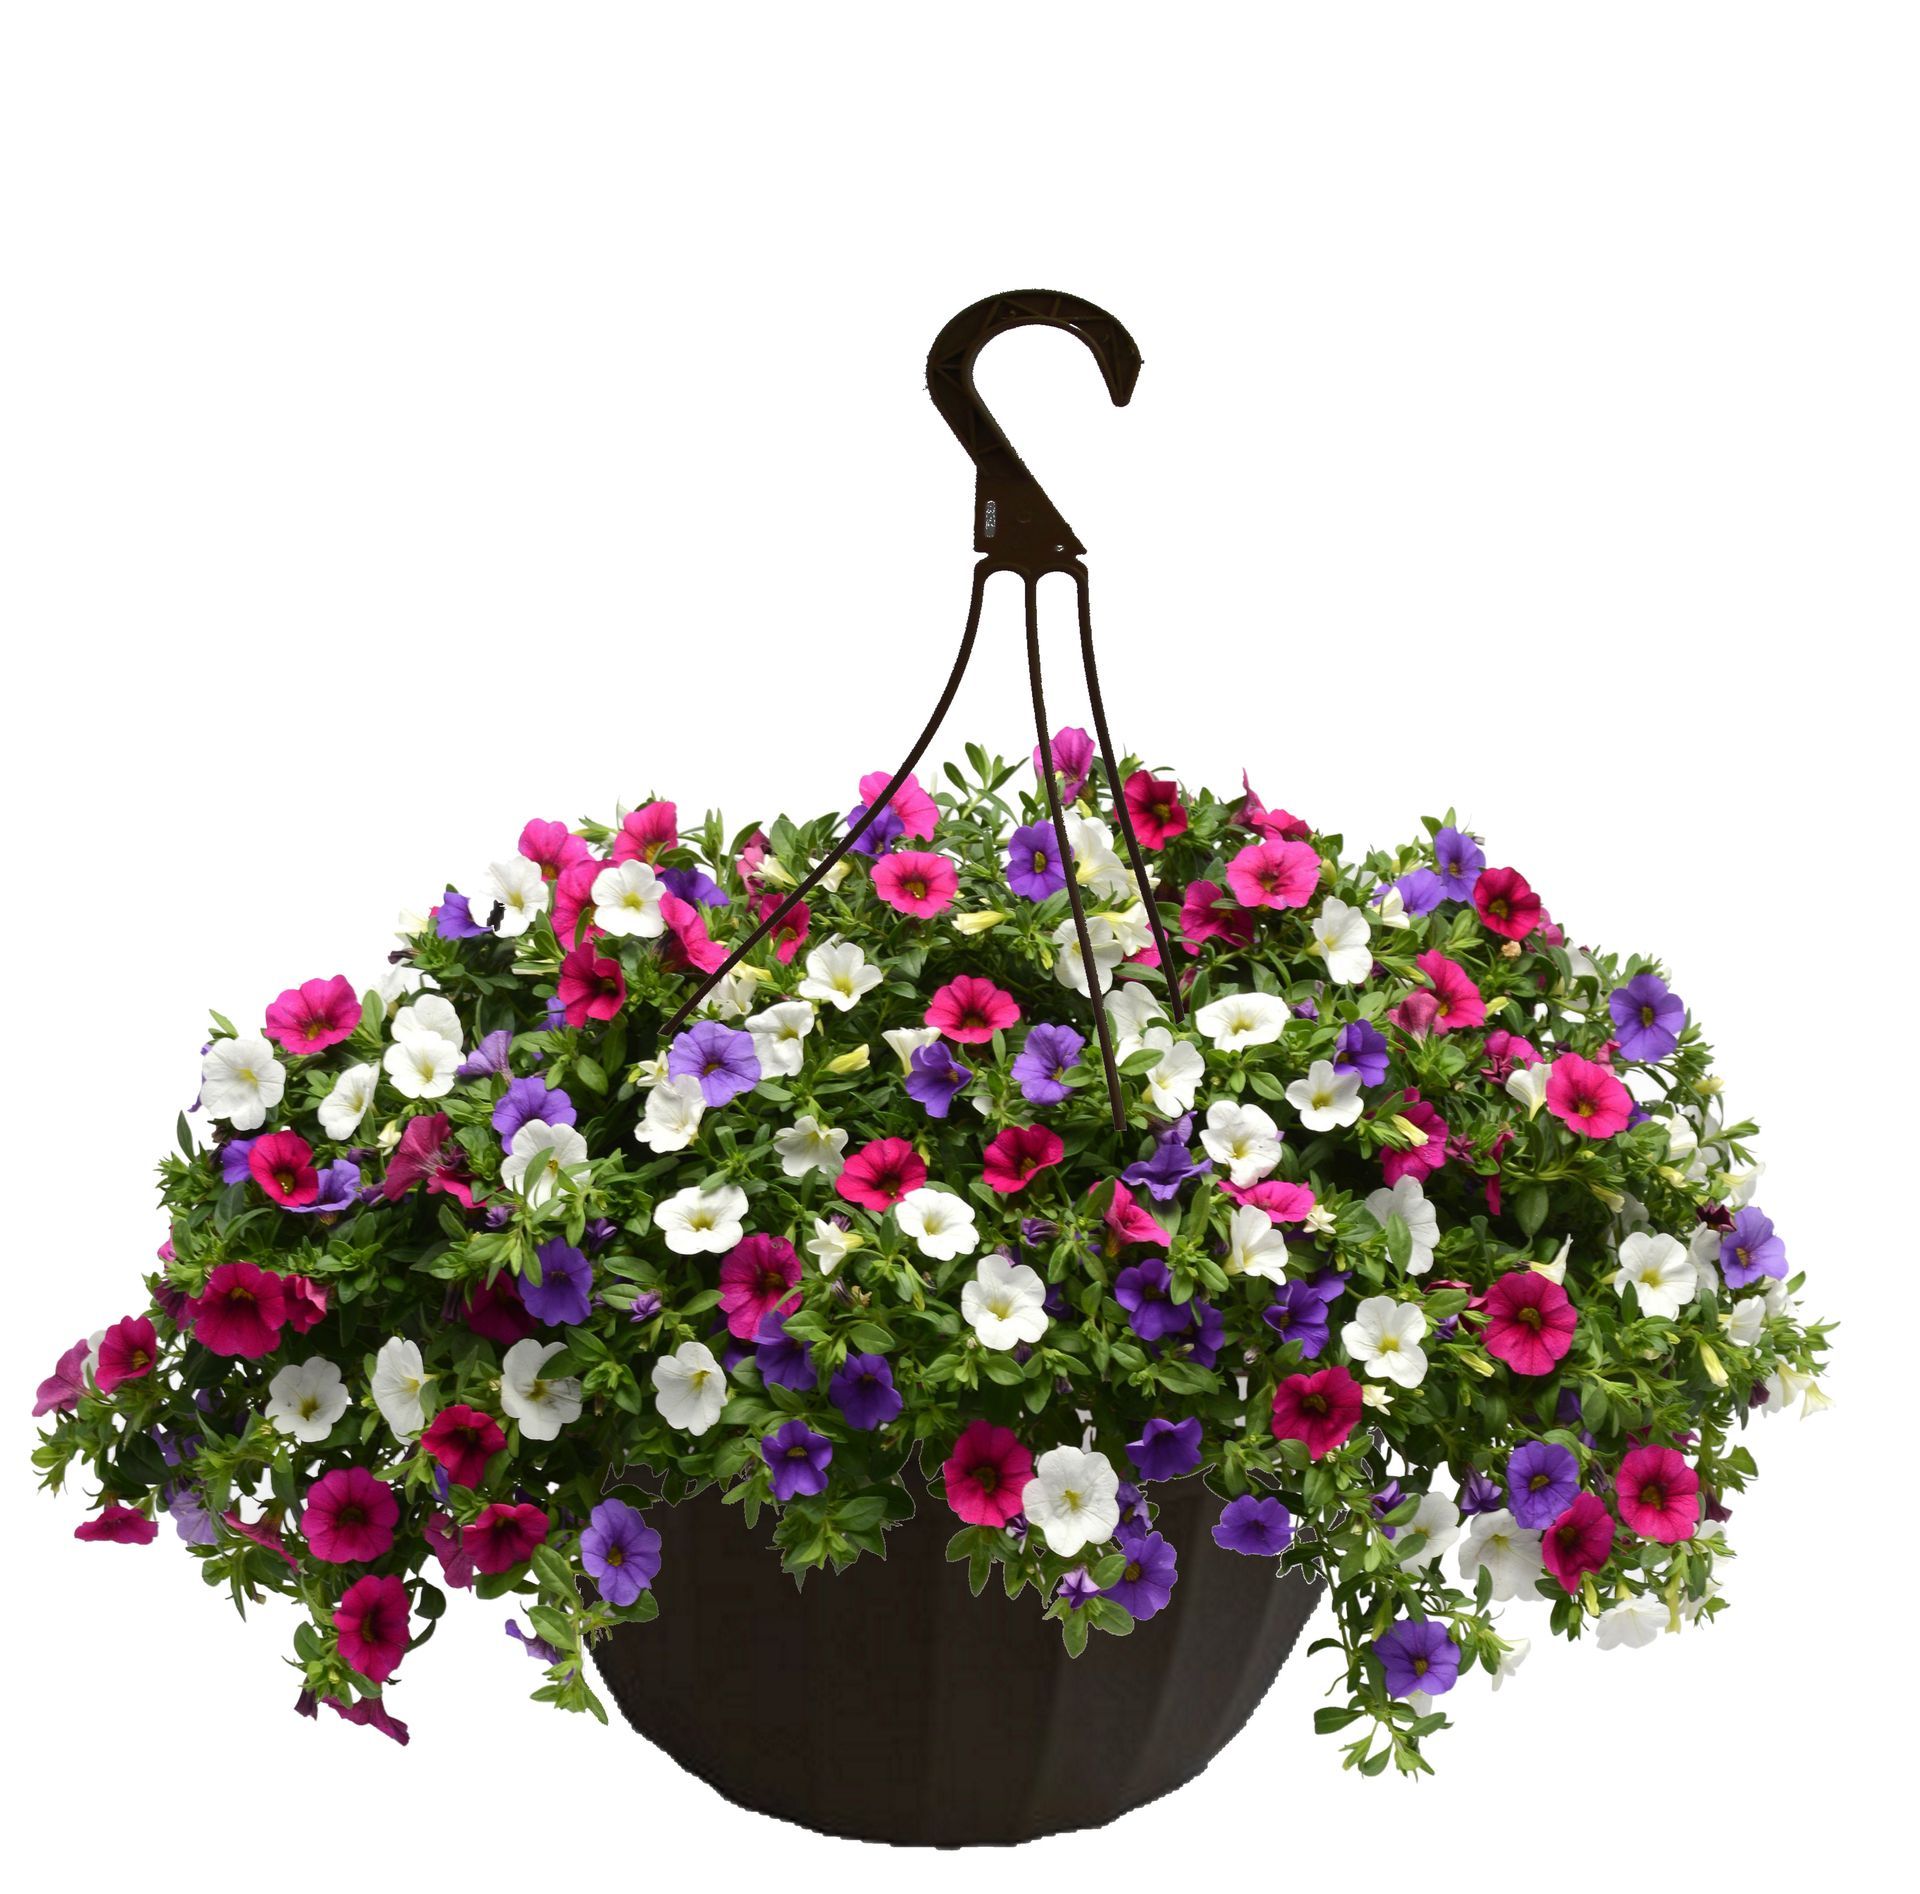 Calibrachoa Hanging Basket flowers for sale in Lebanon PA